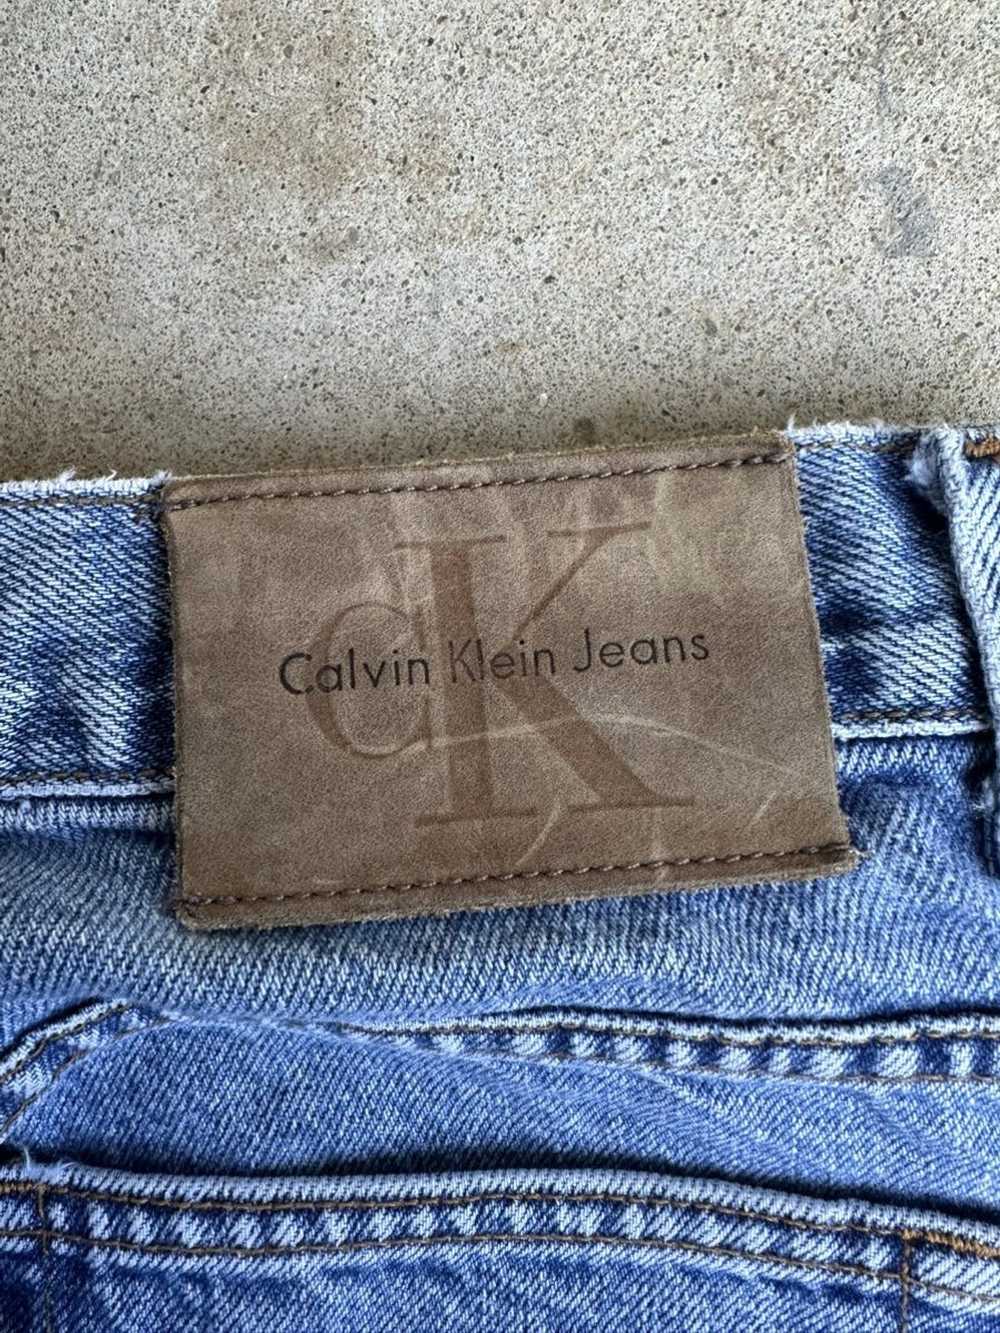 Calvin Klein Calvin Klein Jeans - Vintage - image 2